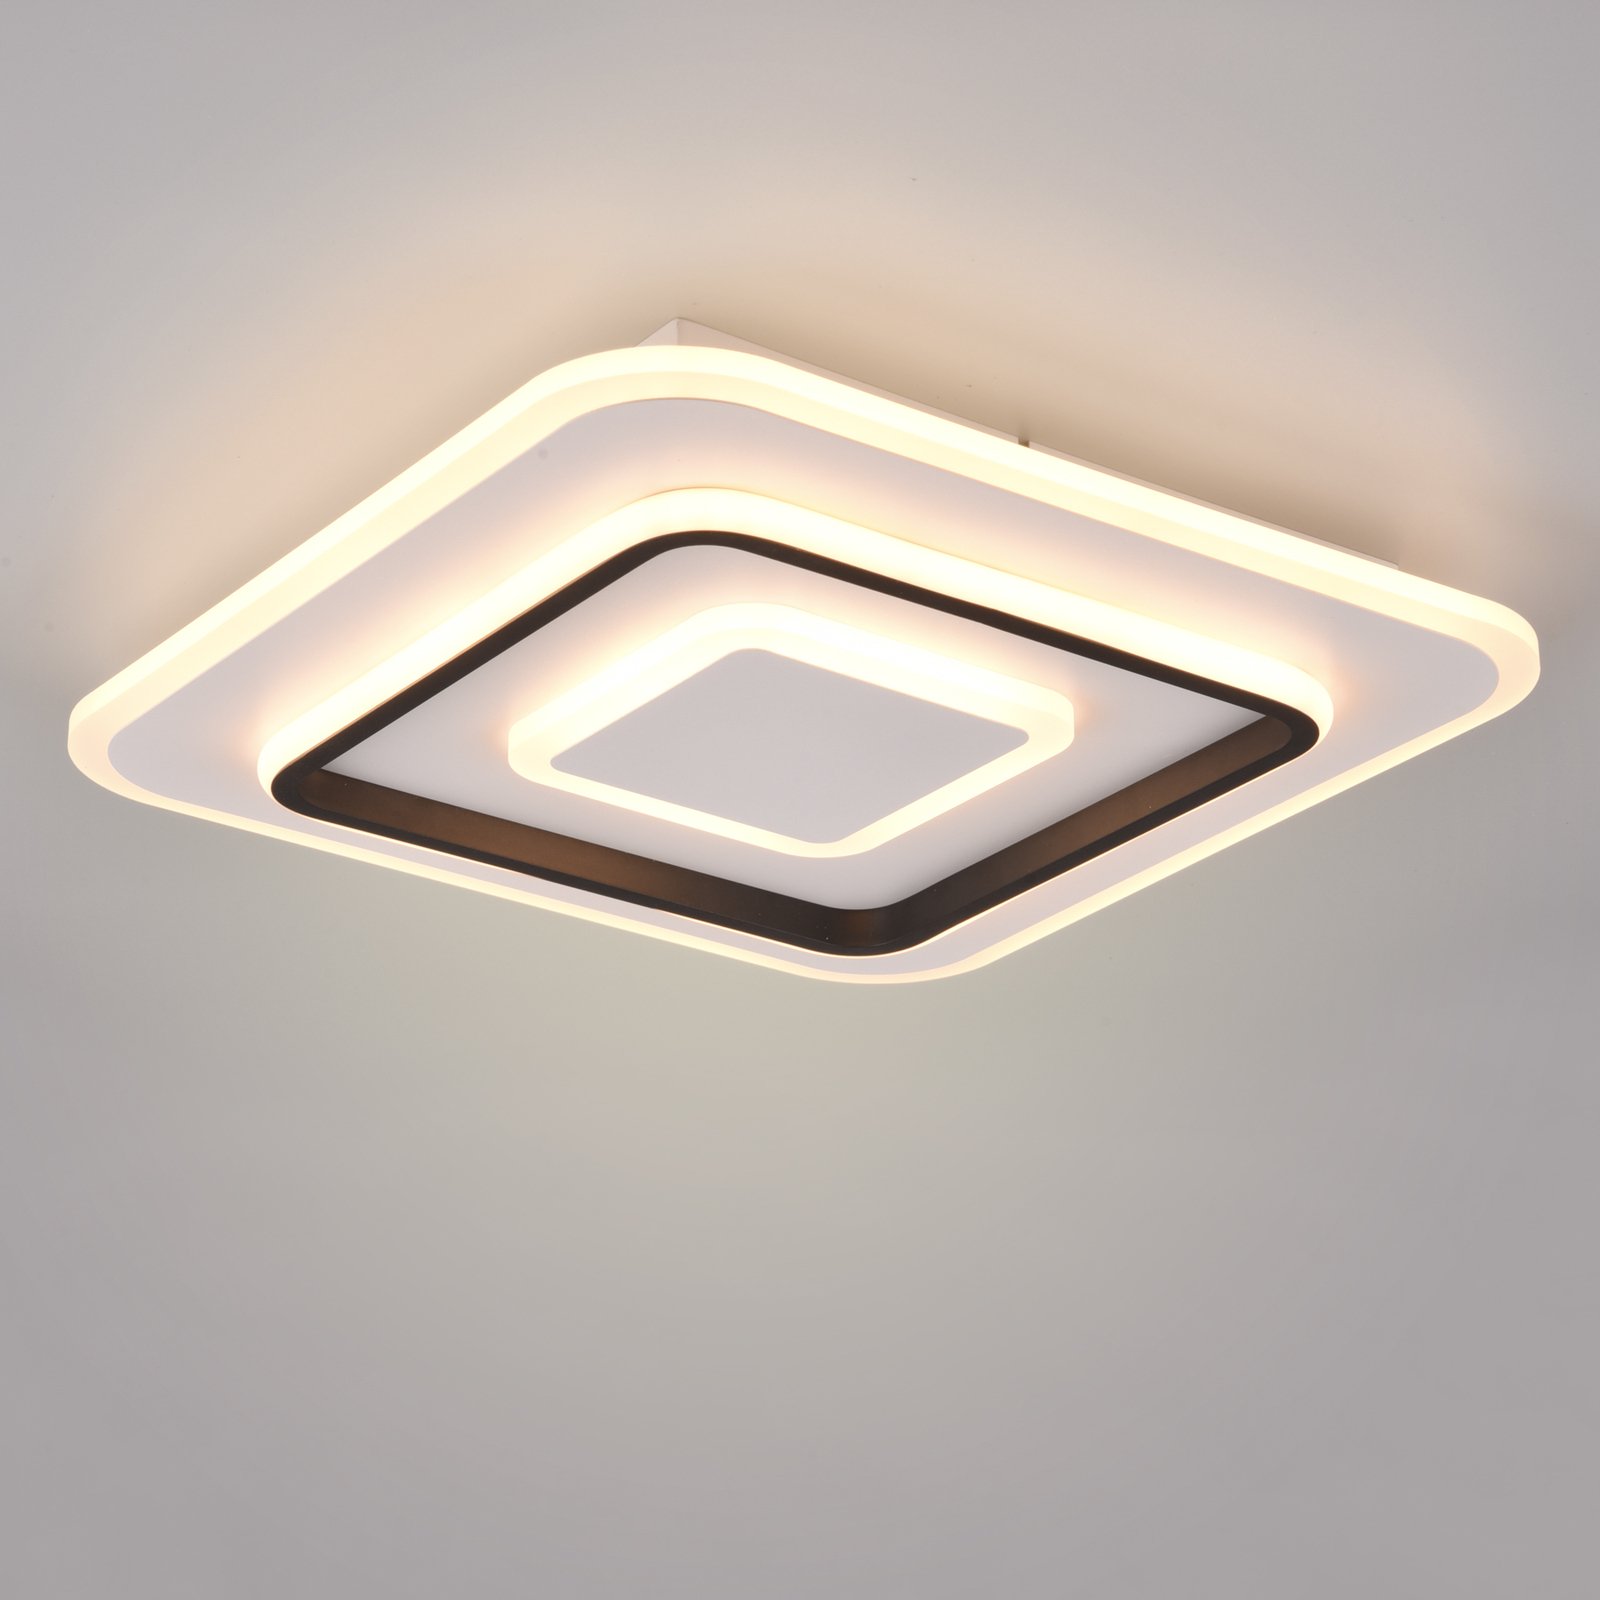 LED ceiling light Jora angular, 39.5 x 39.5 cm